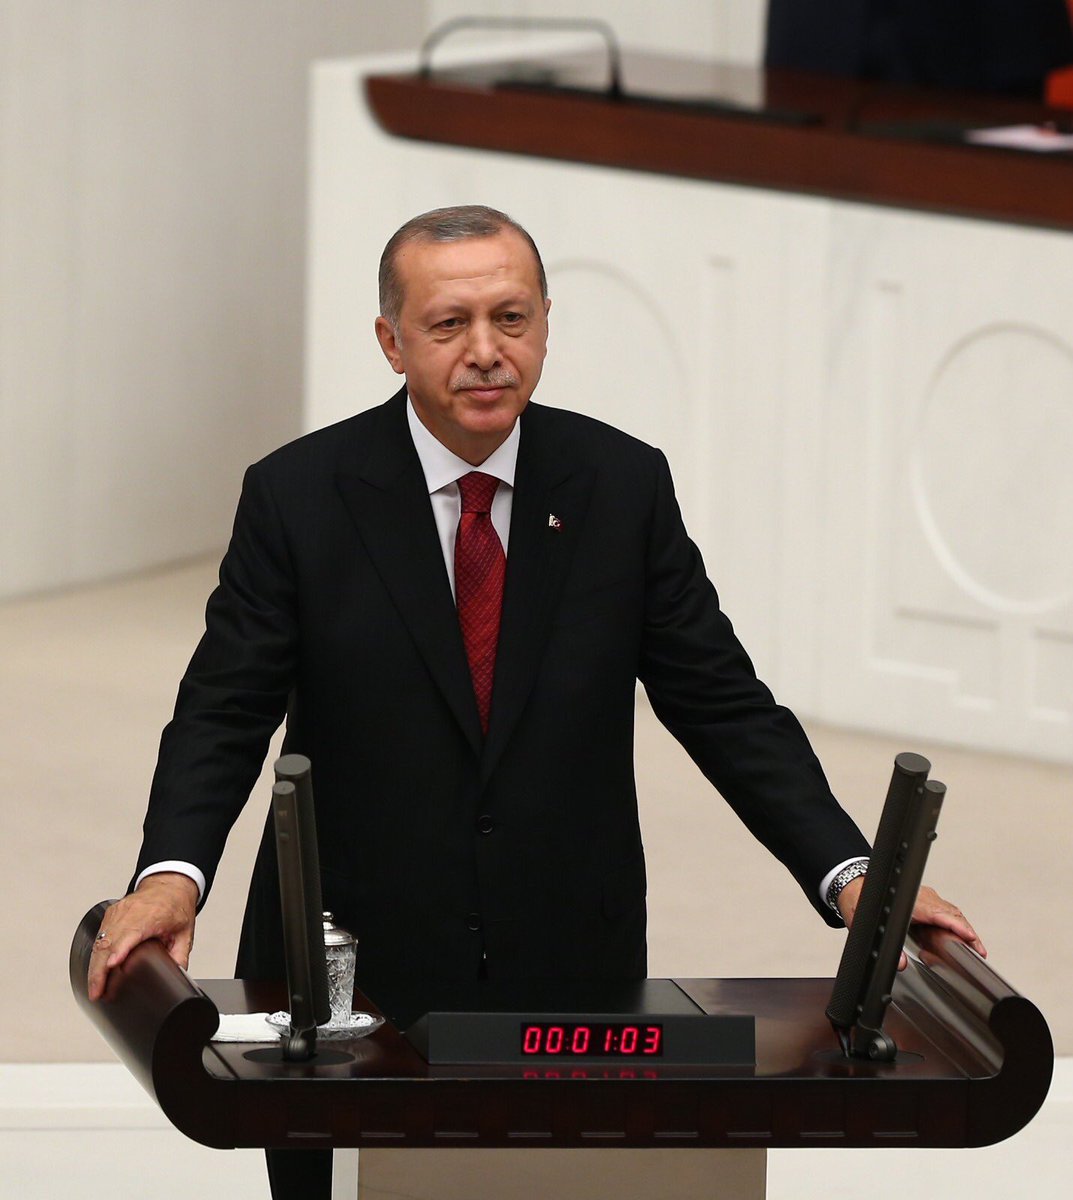 III. Abdülhamit Han 😍
#newarewitherdoğan #reisçünkü #RecepTayyipErdogan #BaşkanErdogan #rte 
@RT_Erdogan